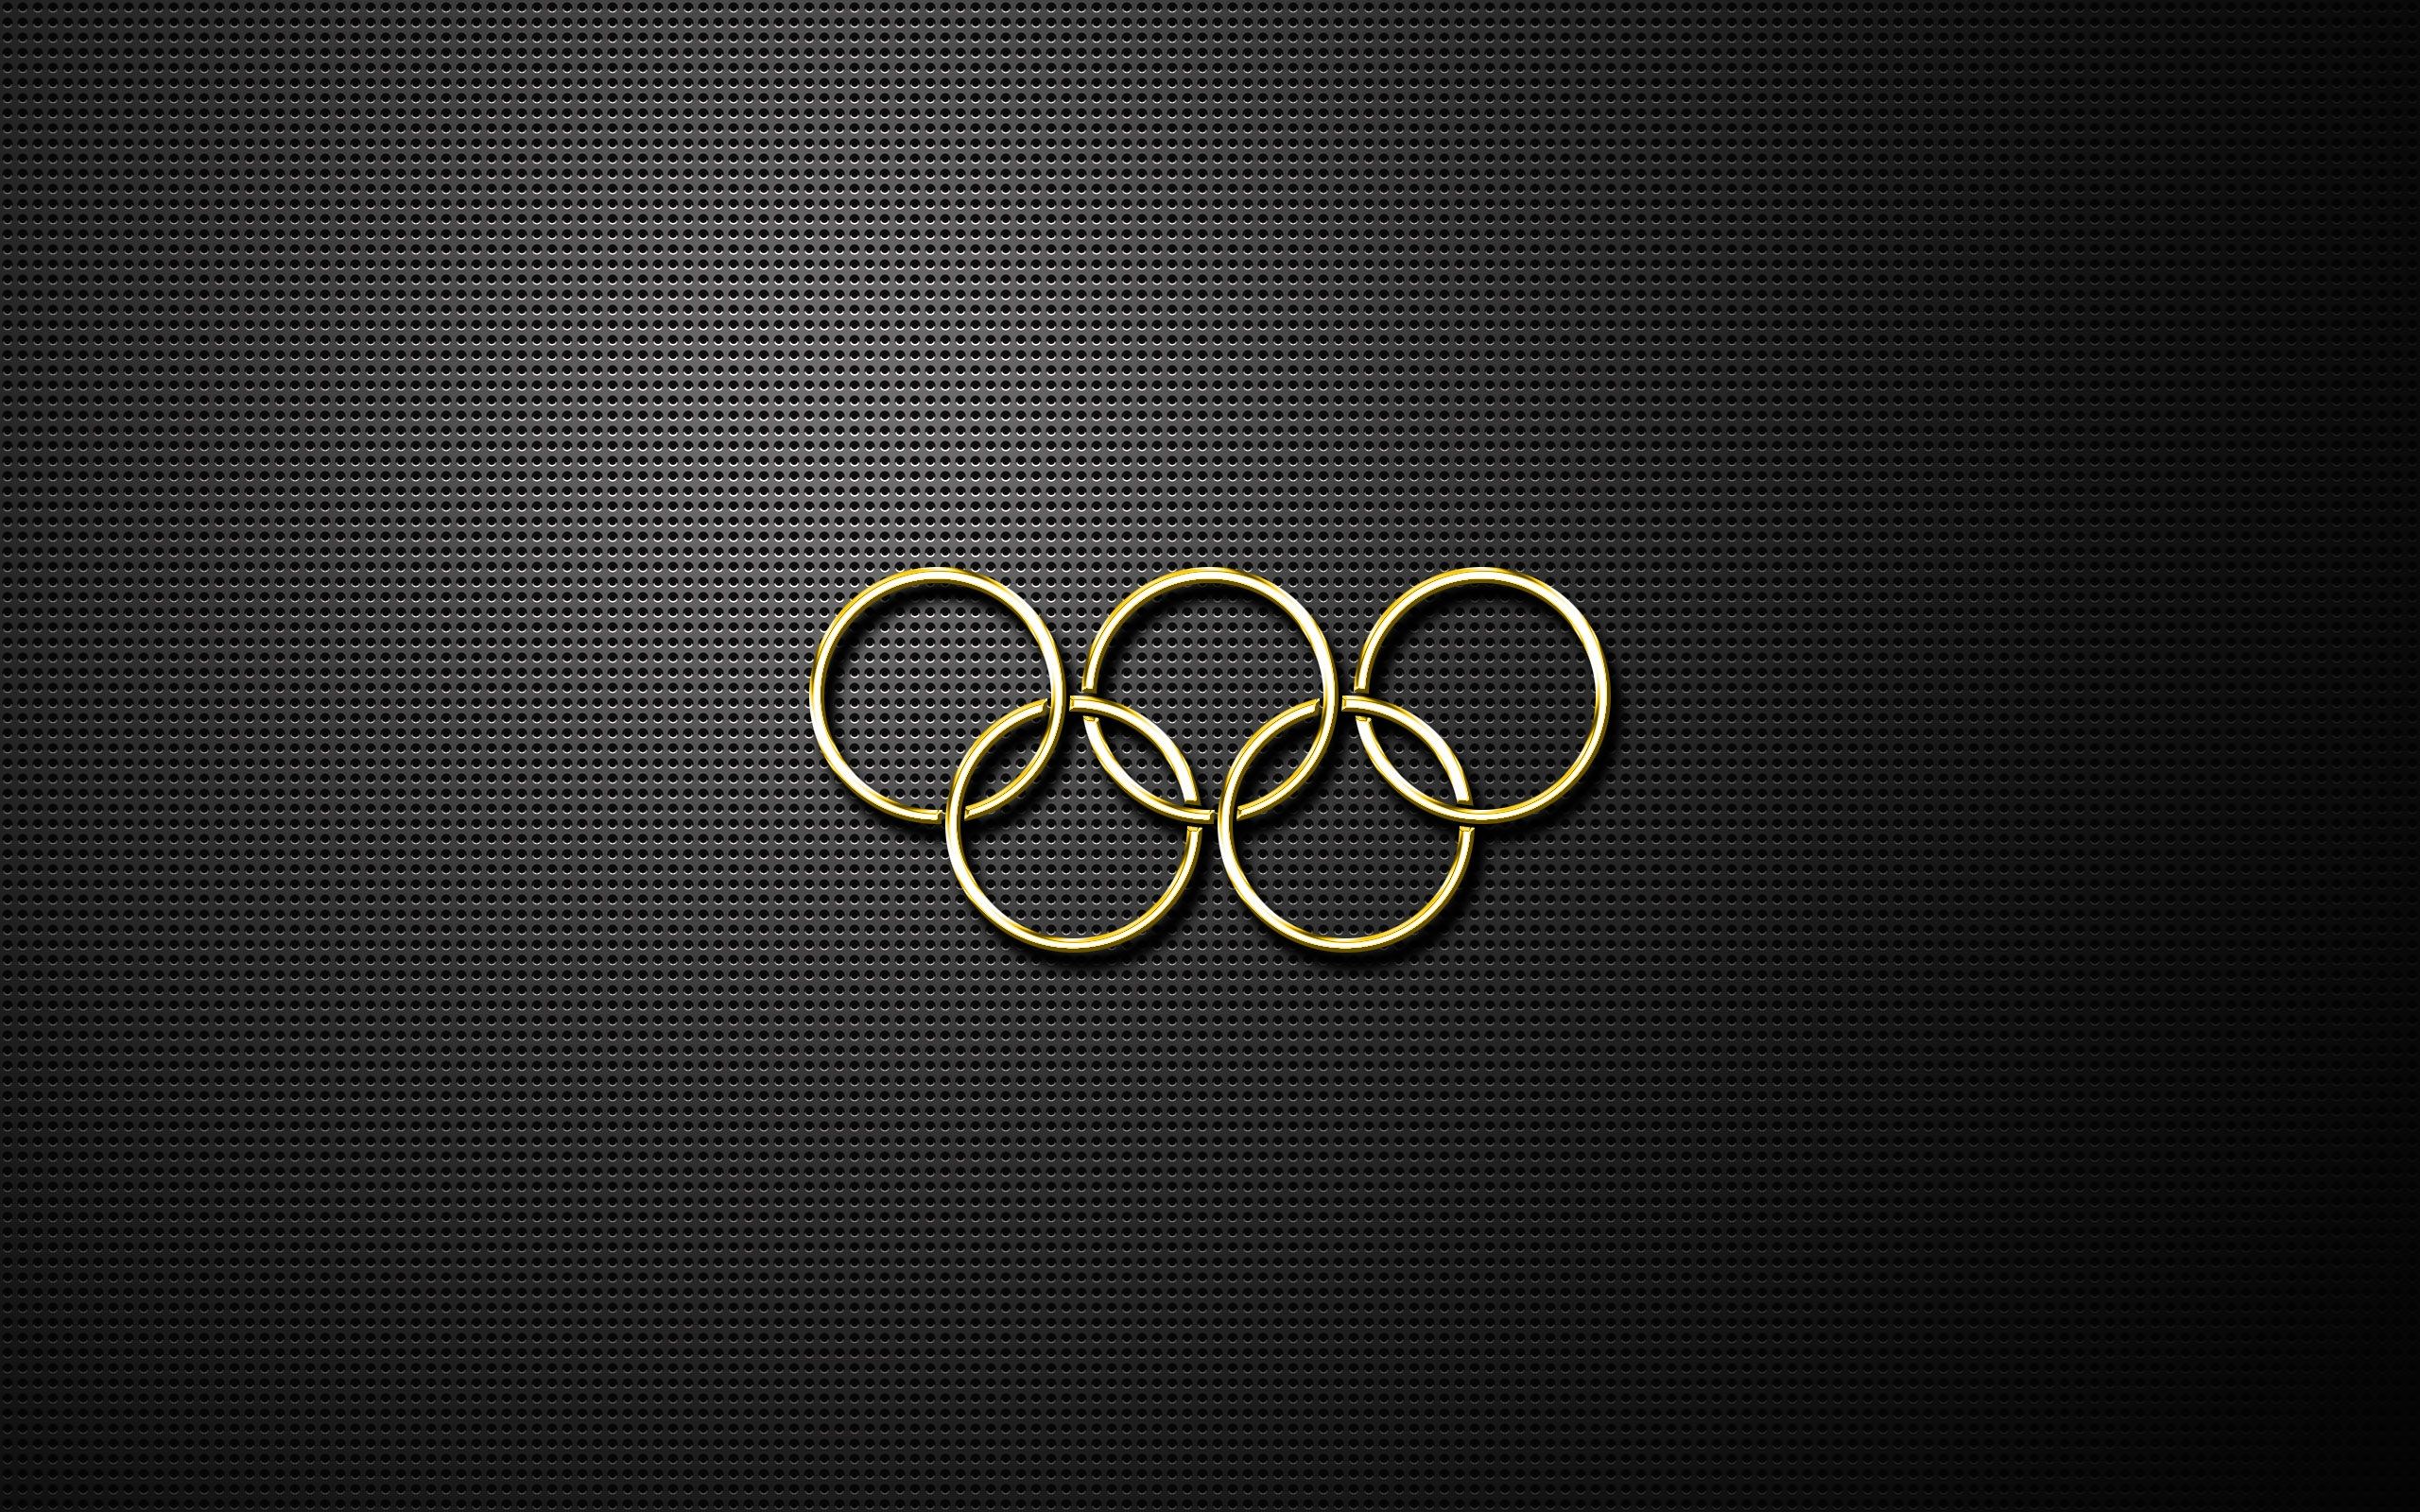 Olympics Rings Desktop Wallpaper Naruto Logos Theme Pictures